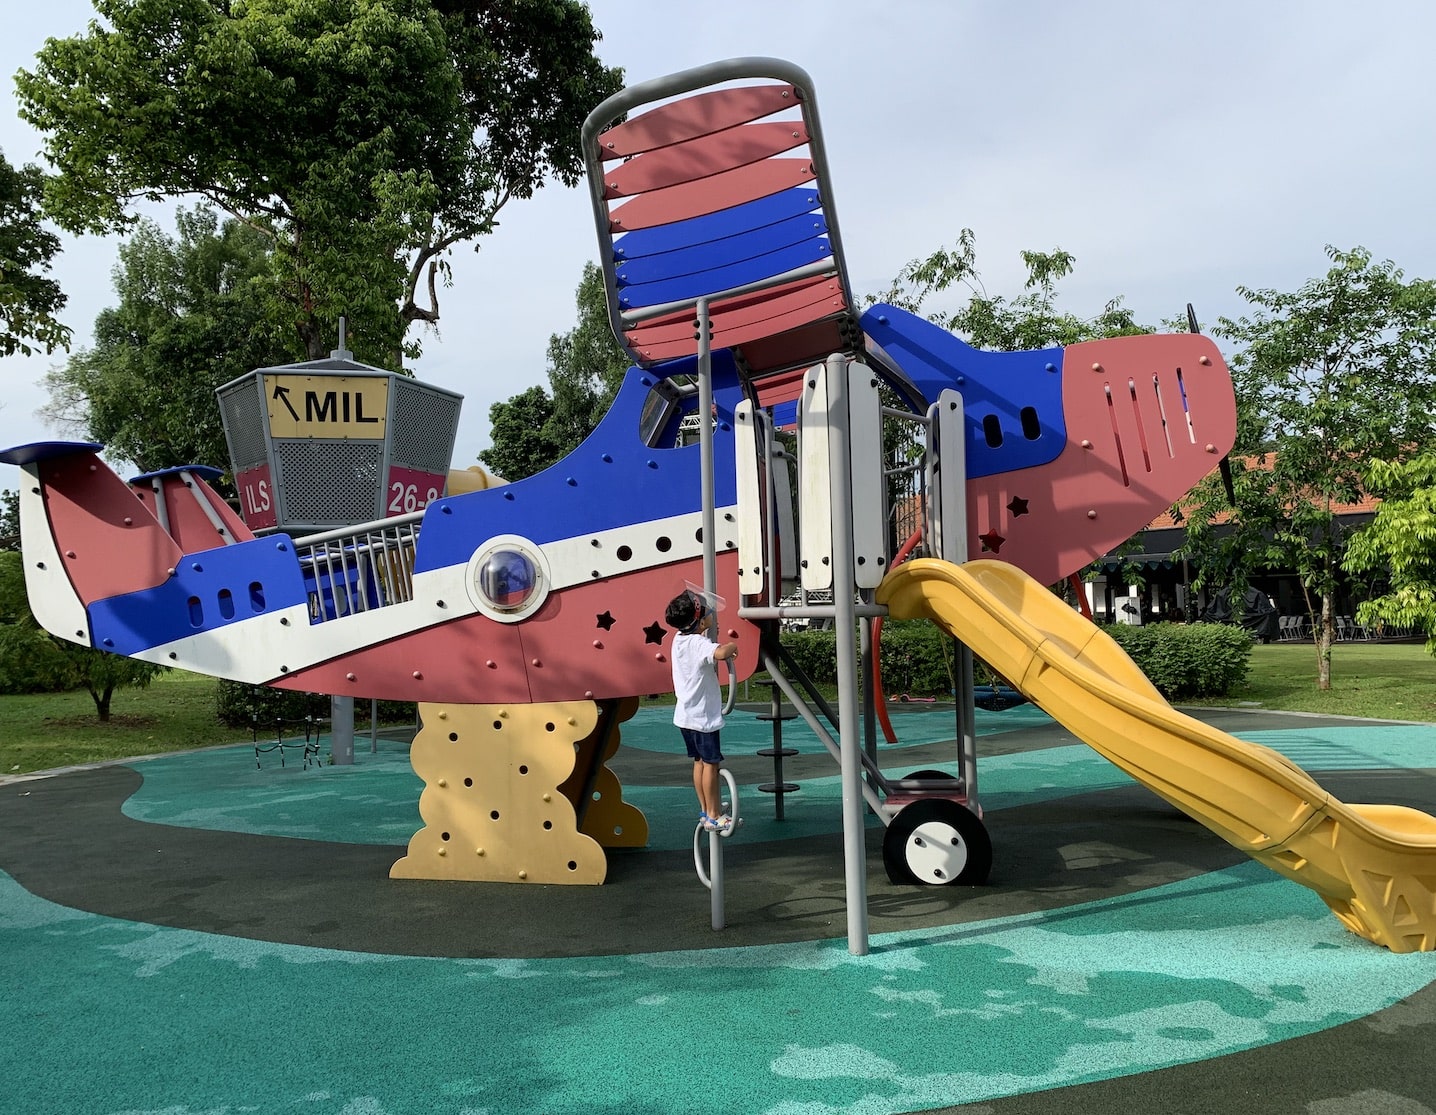 Seletar Aerospace park  is a fun kids activity in singapore